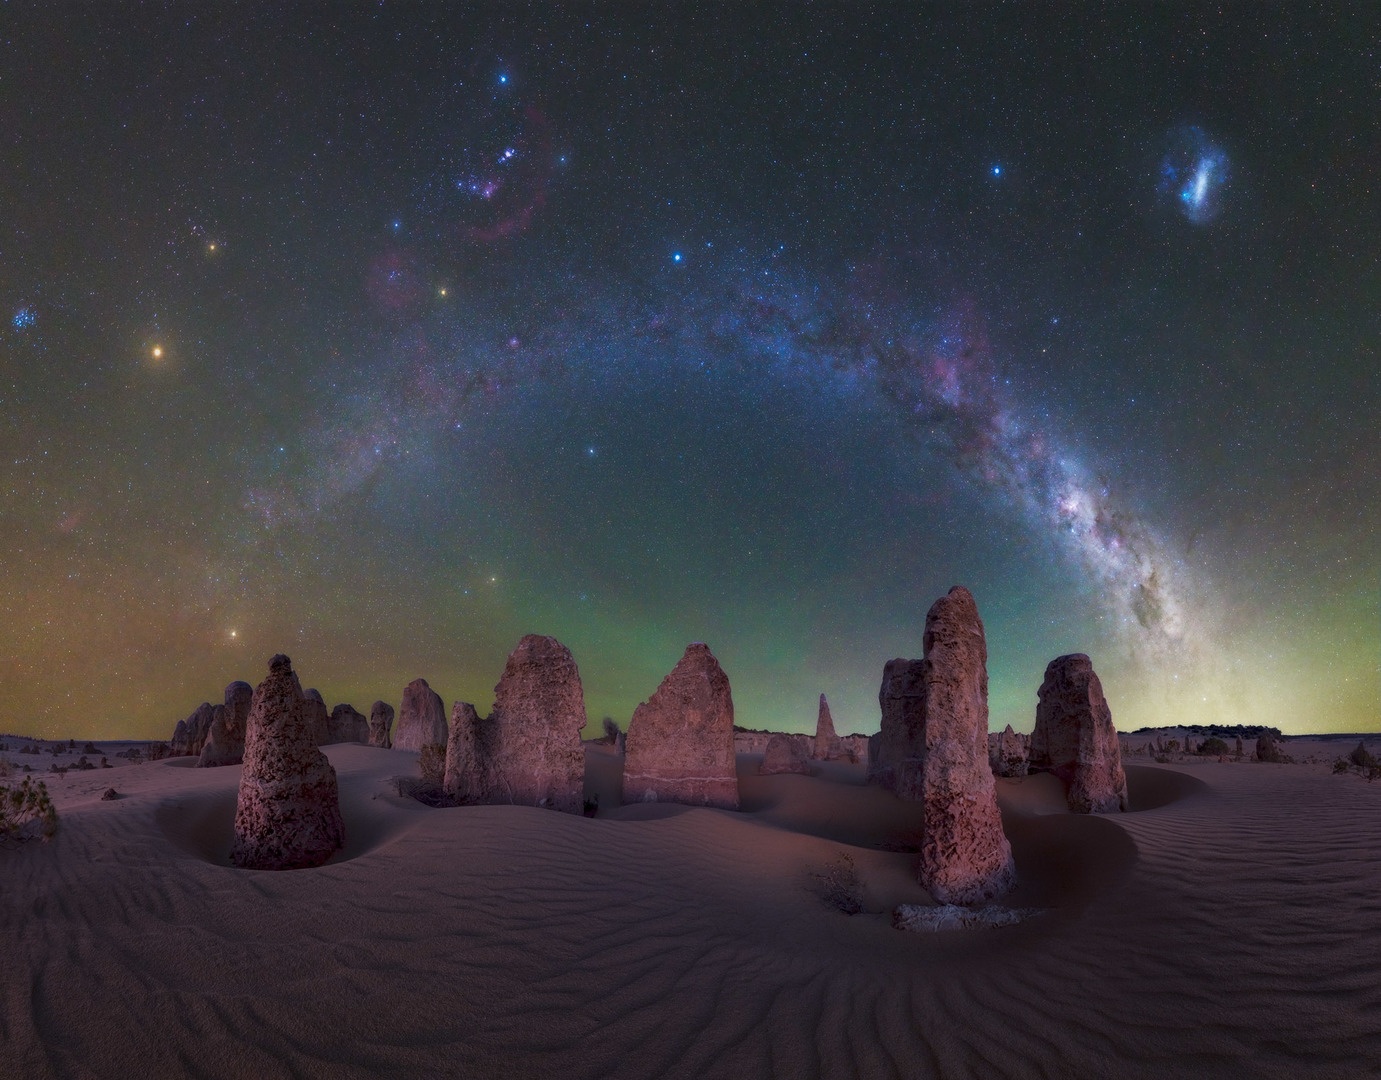 Milky Way over rock formations in a desert in Australia